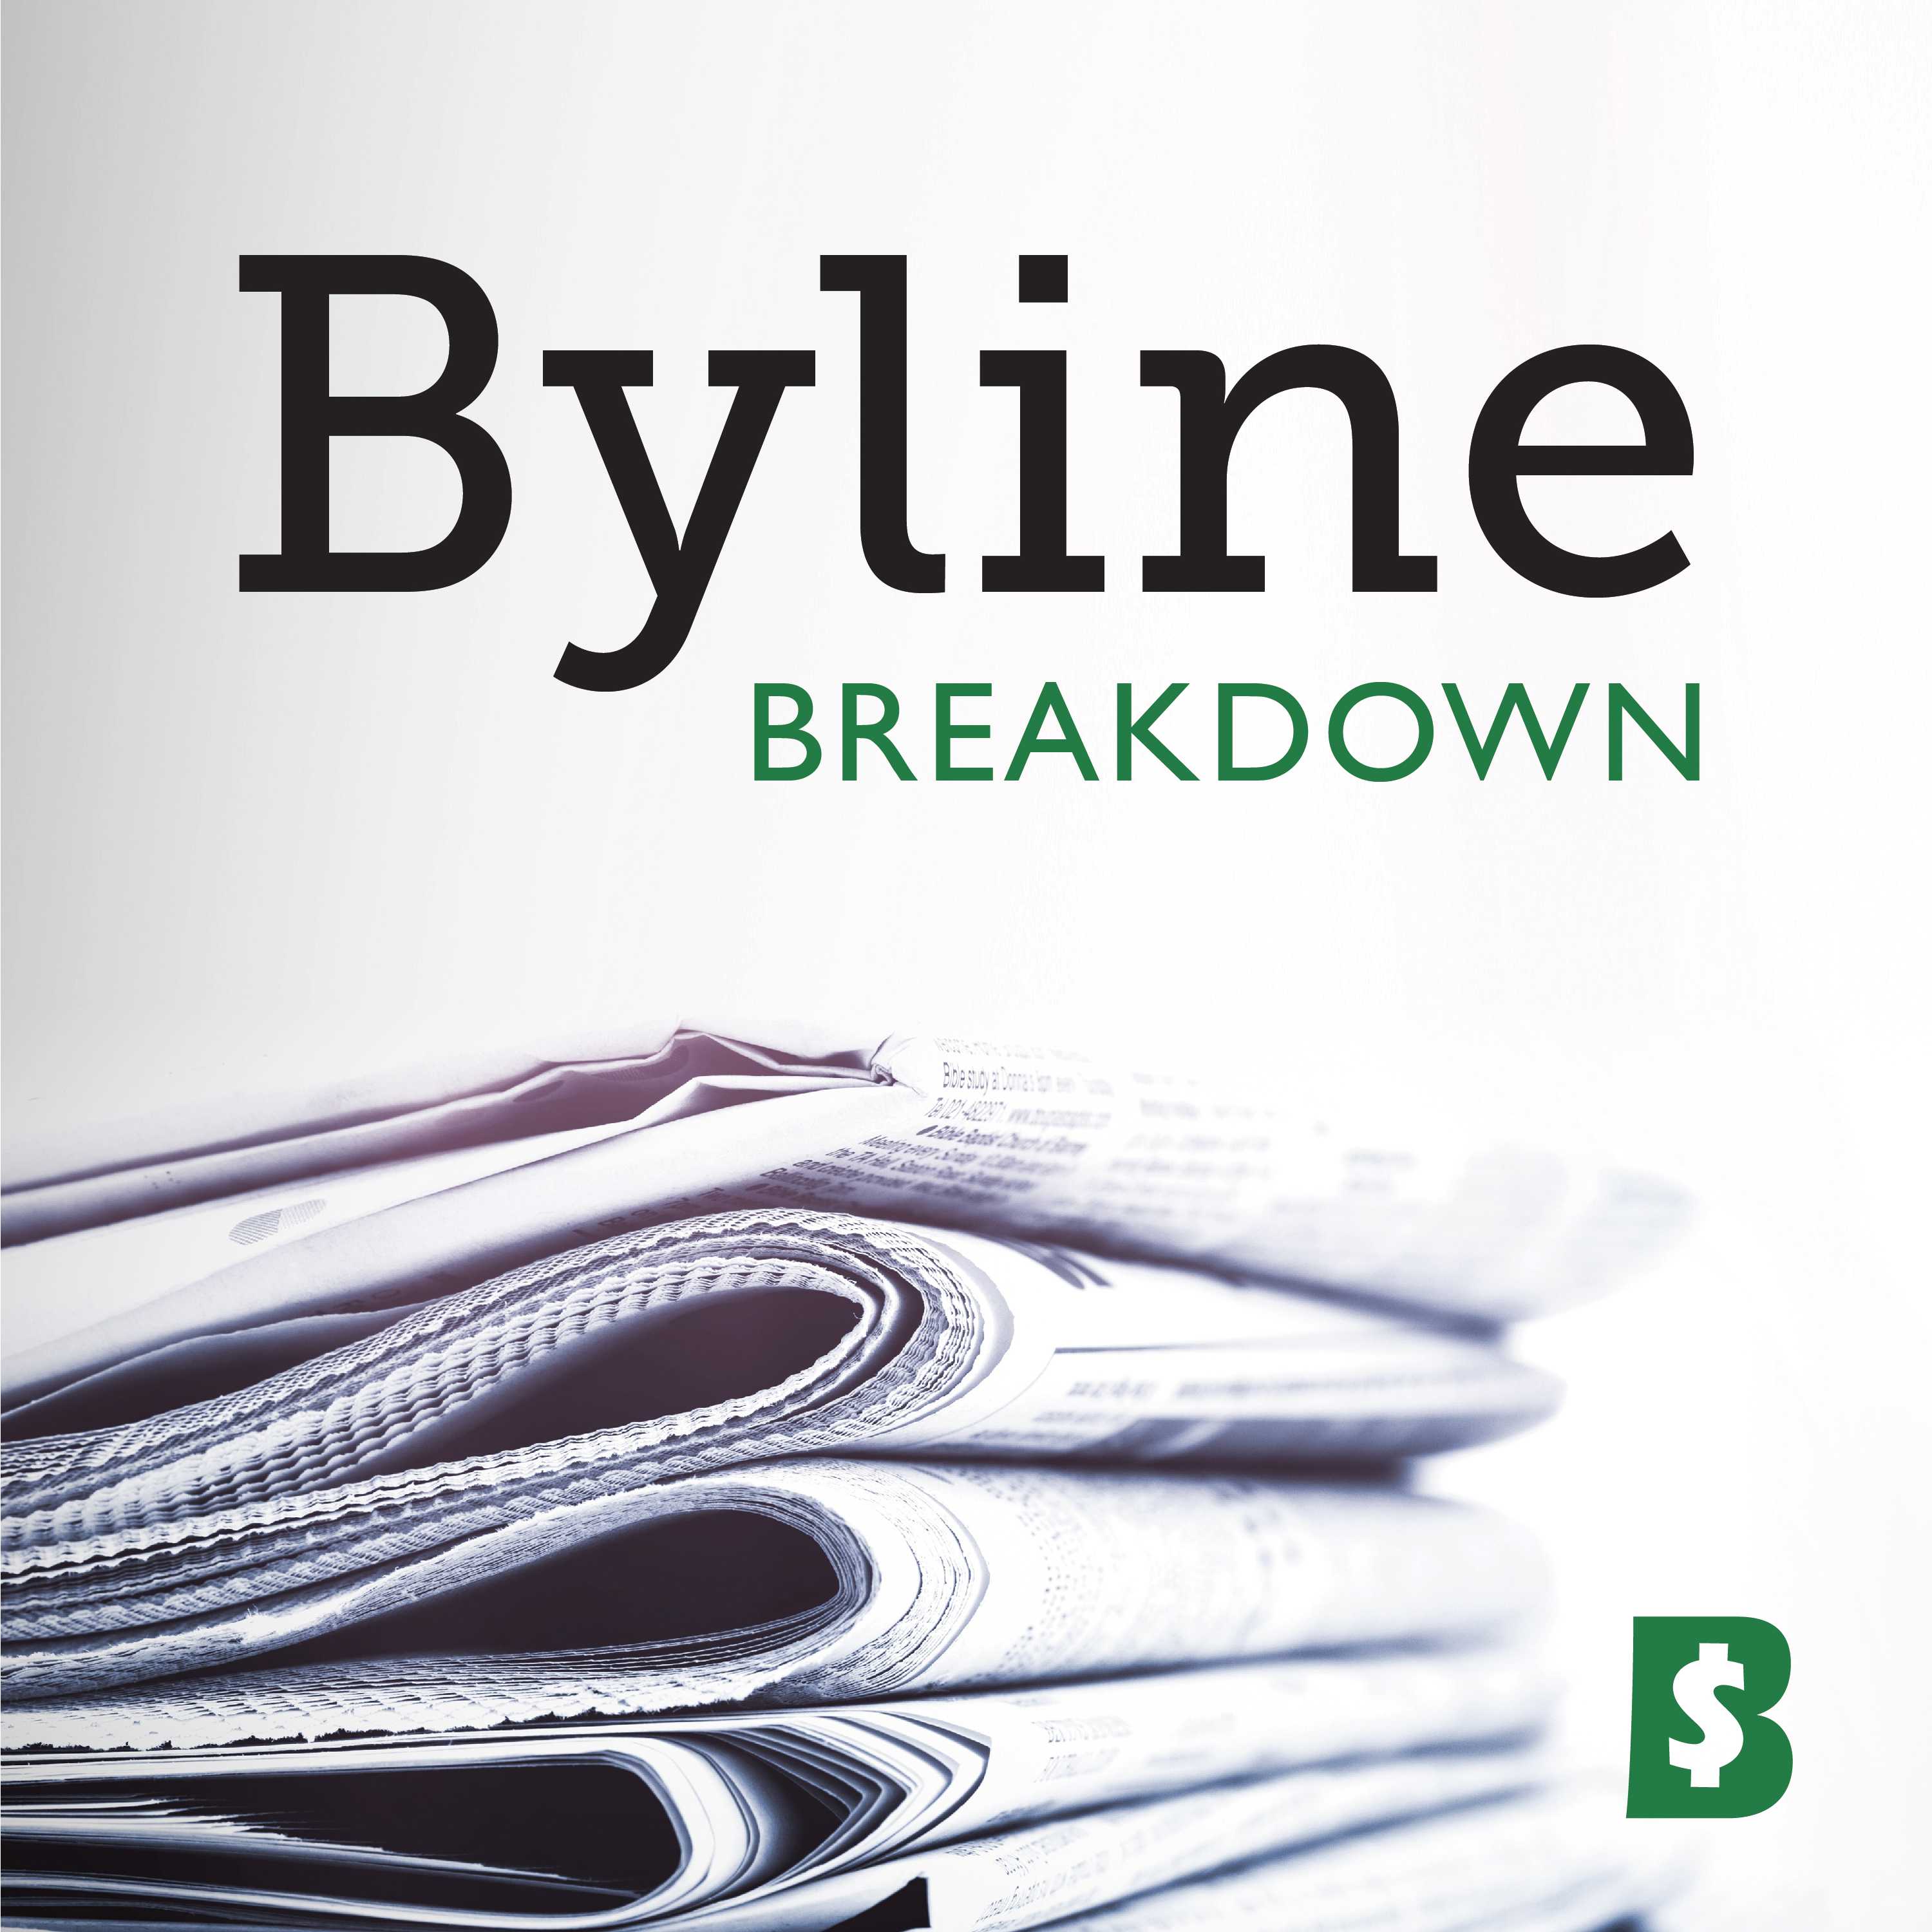 The Byline Breakdown